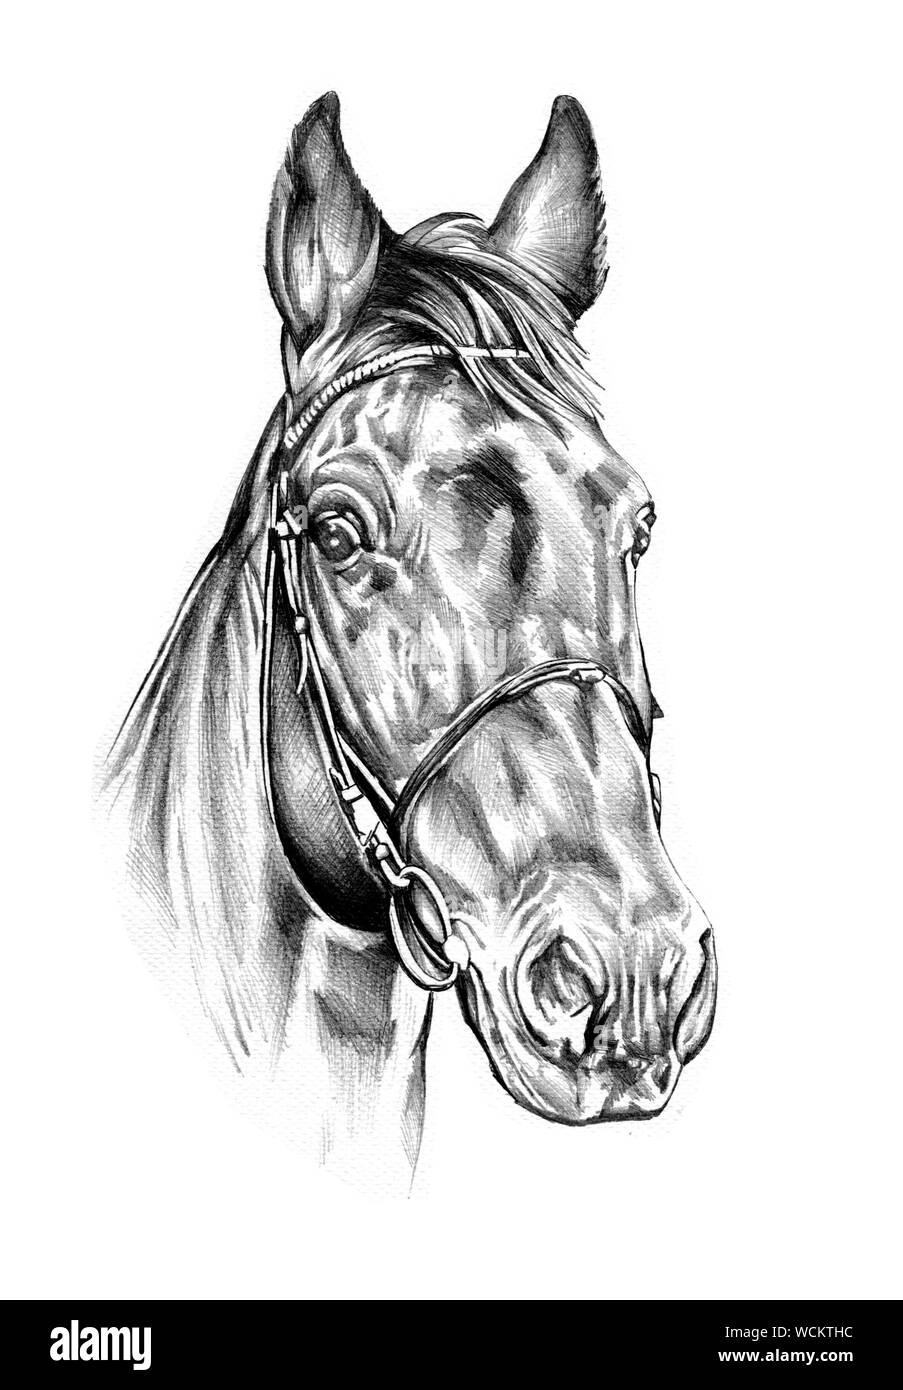 Dibujo de cabeza de caballo Imágenes recortadas de stock - Alamy